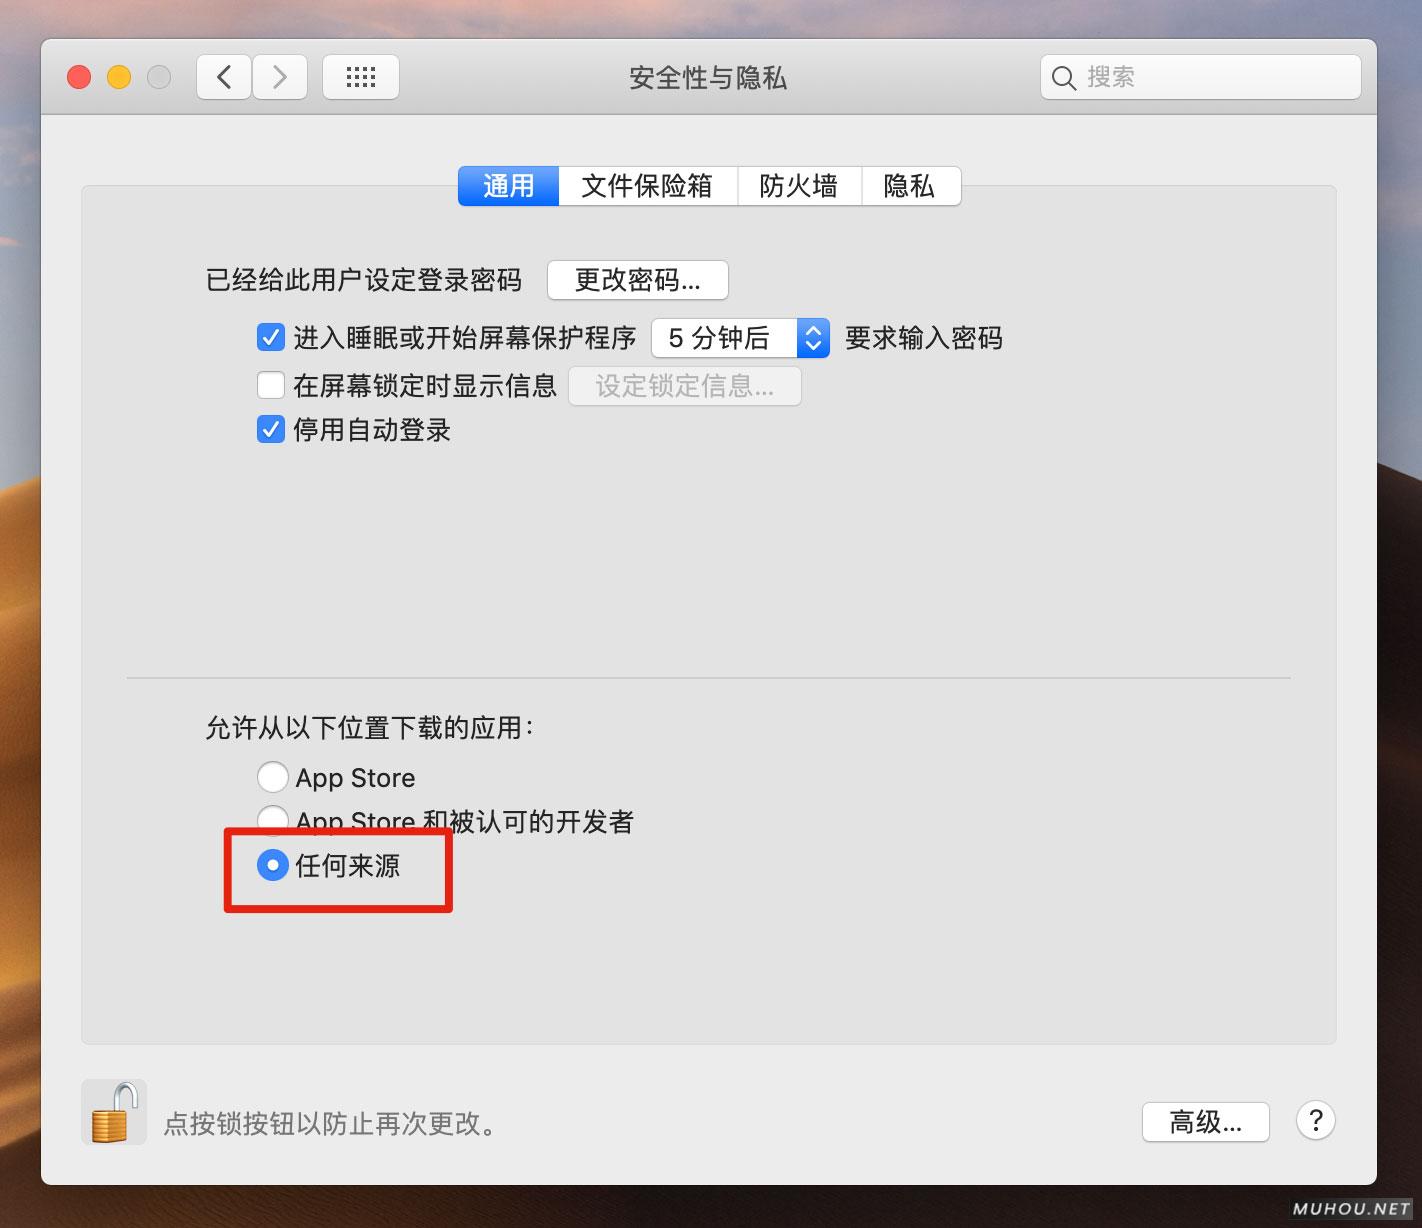 Capture One 21 Pro 14.0.1.7 简体中文破解版下载 (MAC飞思照片后期软件) 支持Silicon M1插图1